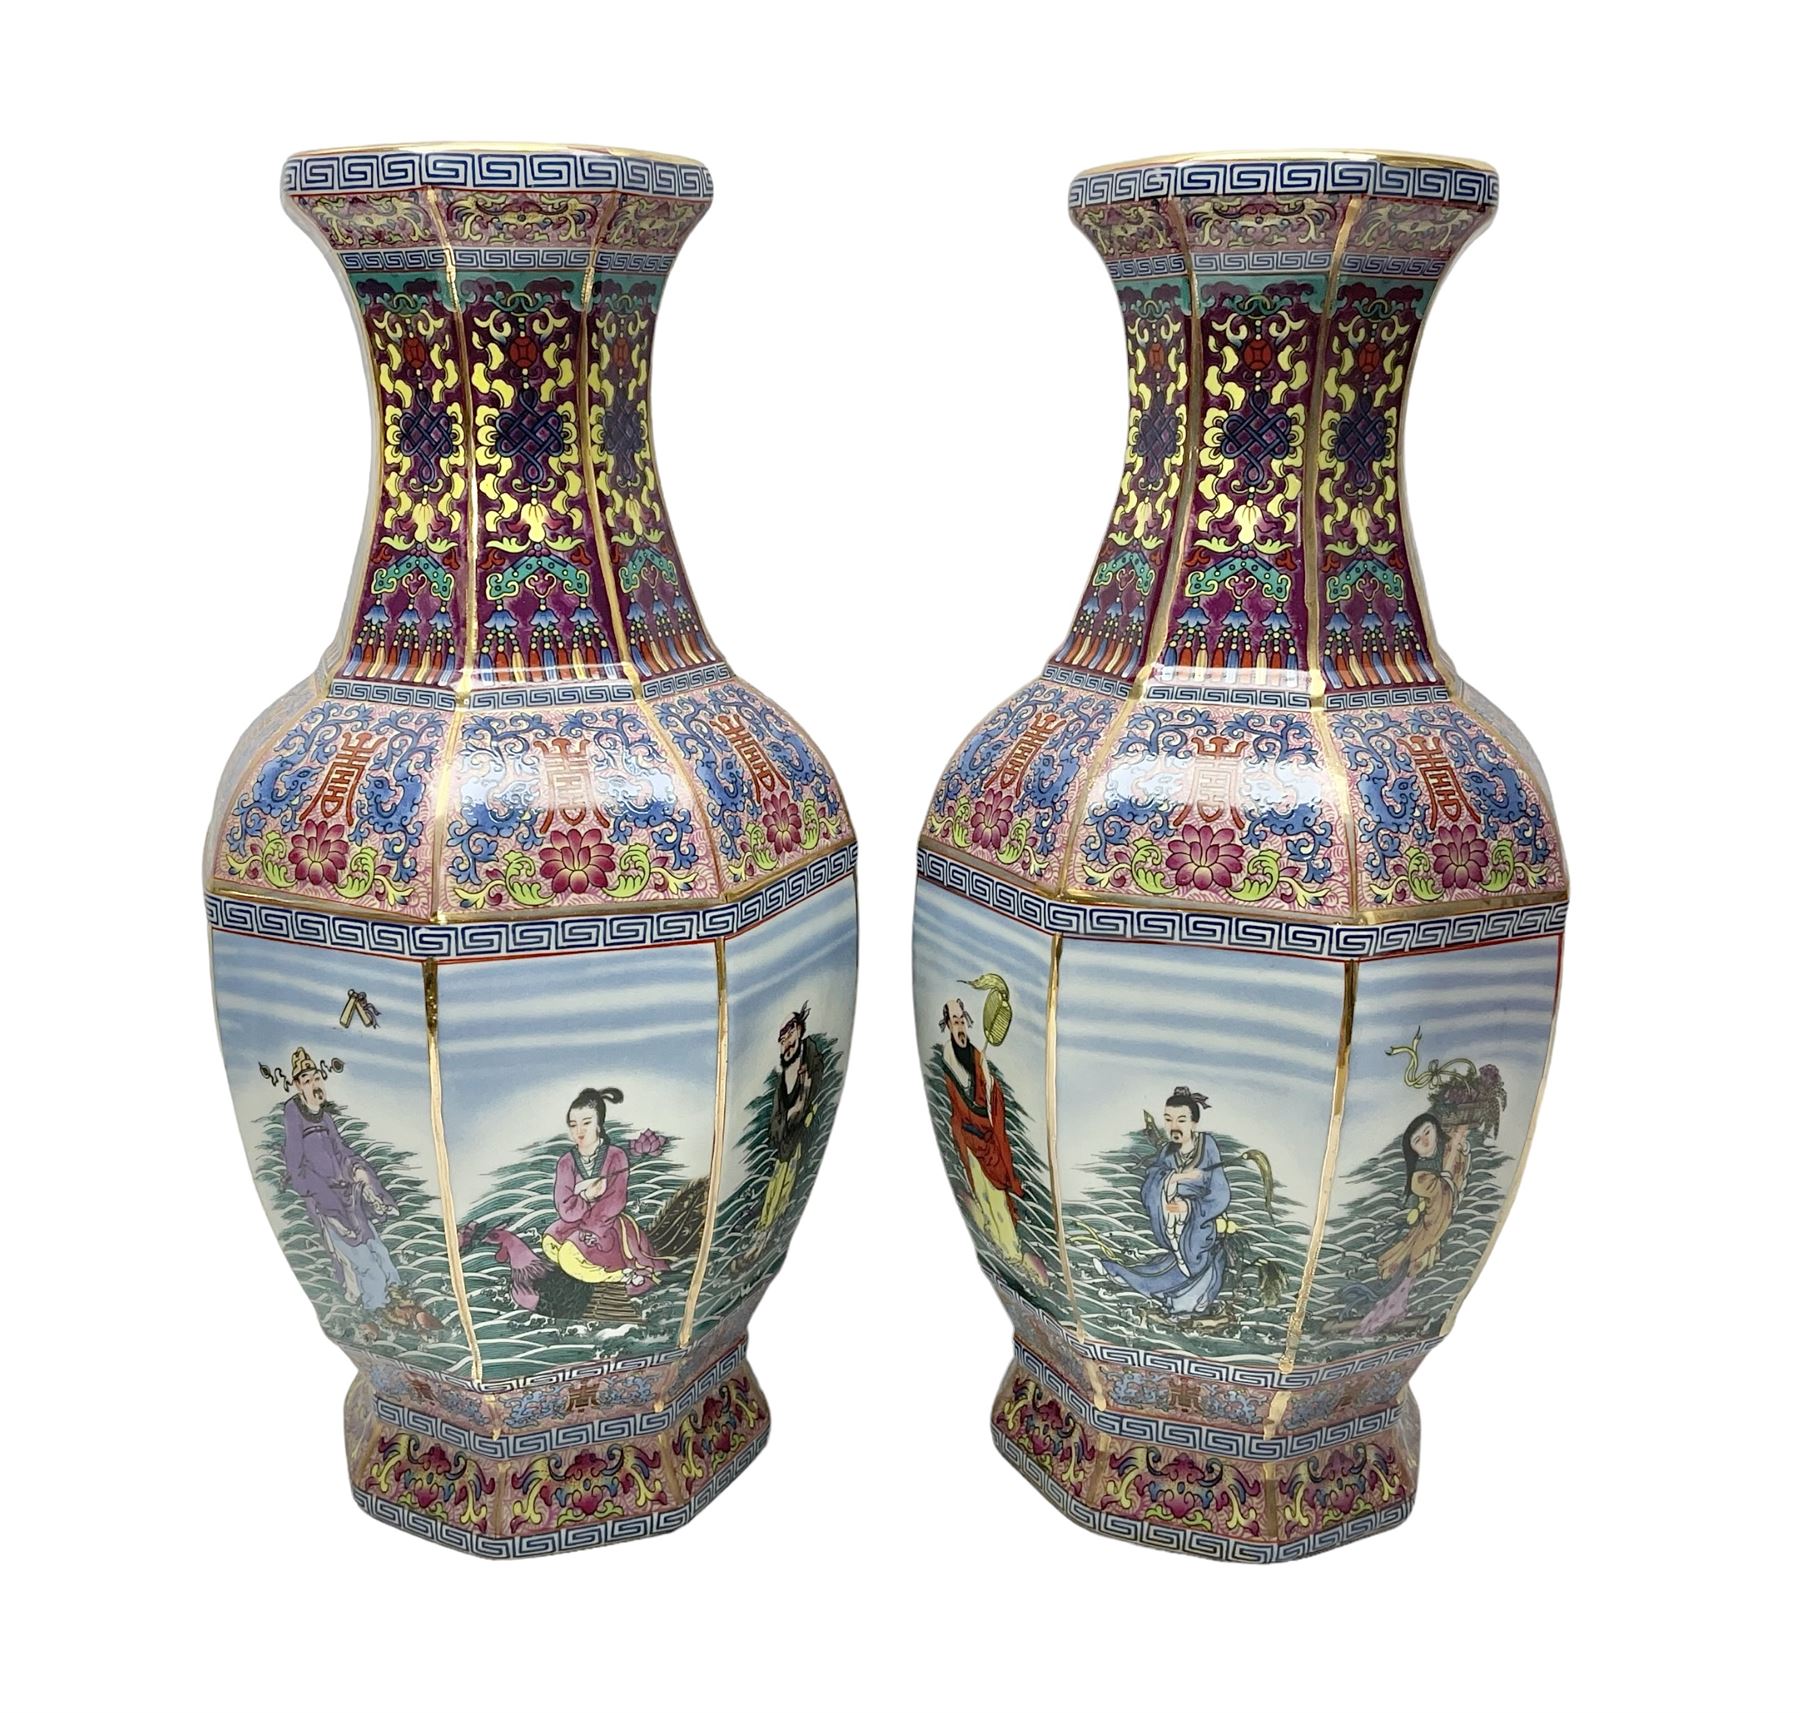 Pair of 20th century Chinese vases